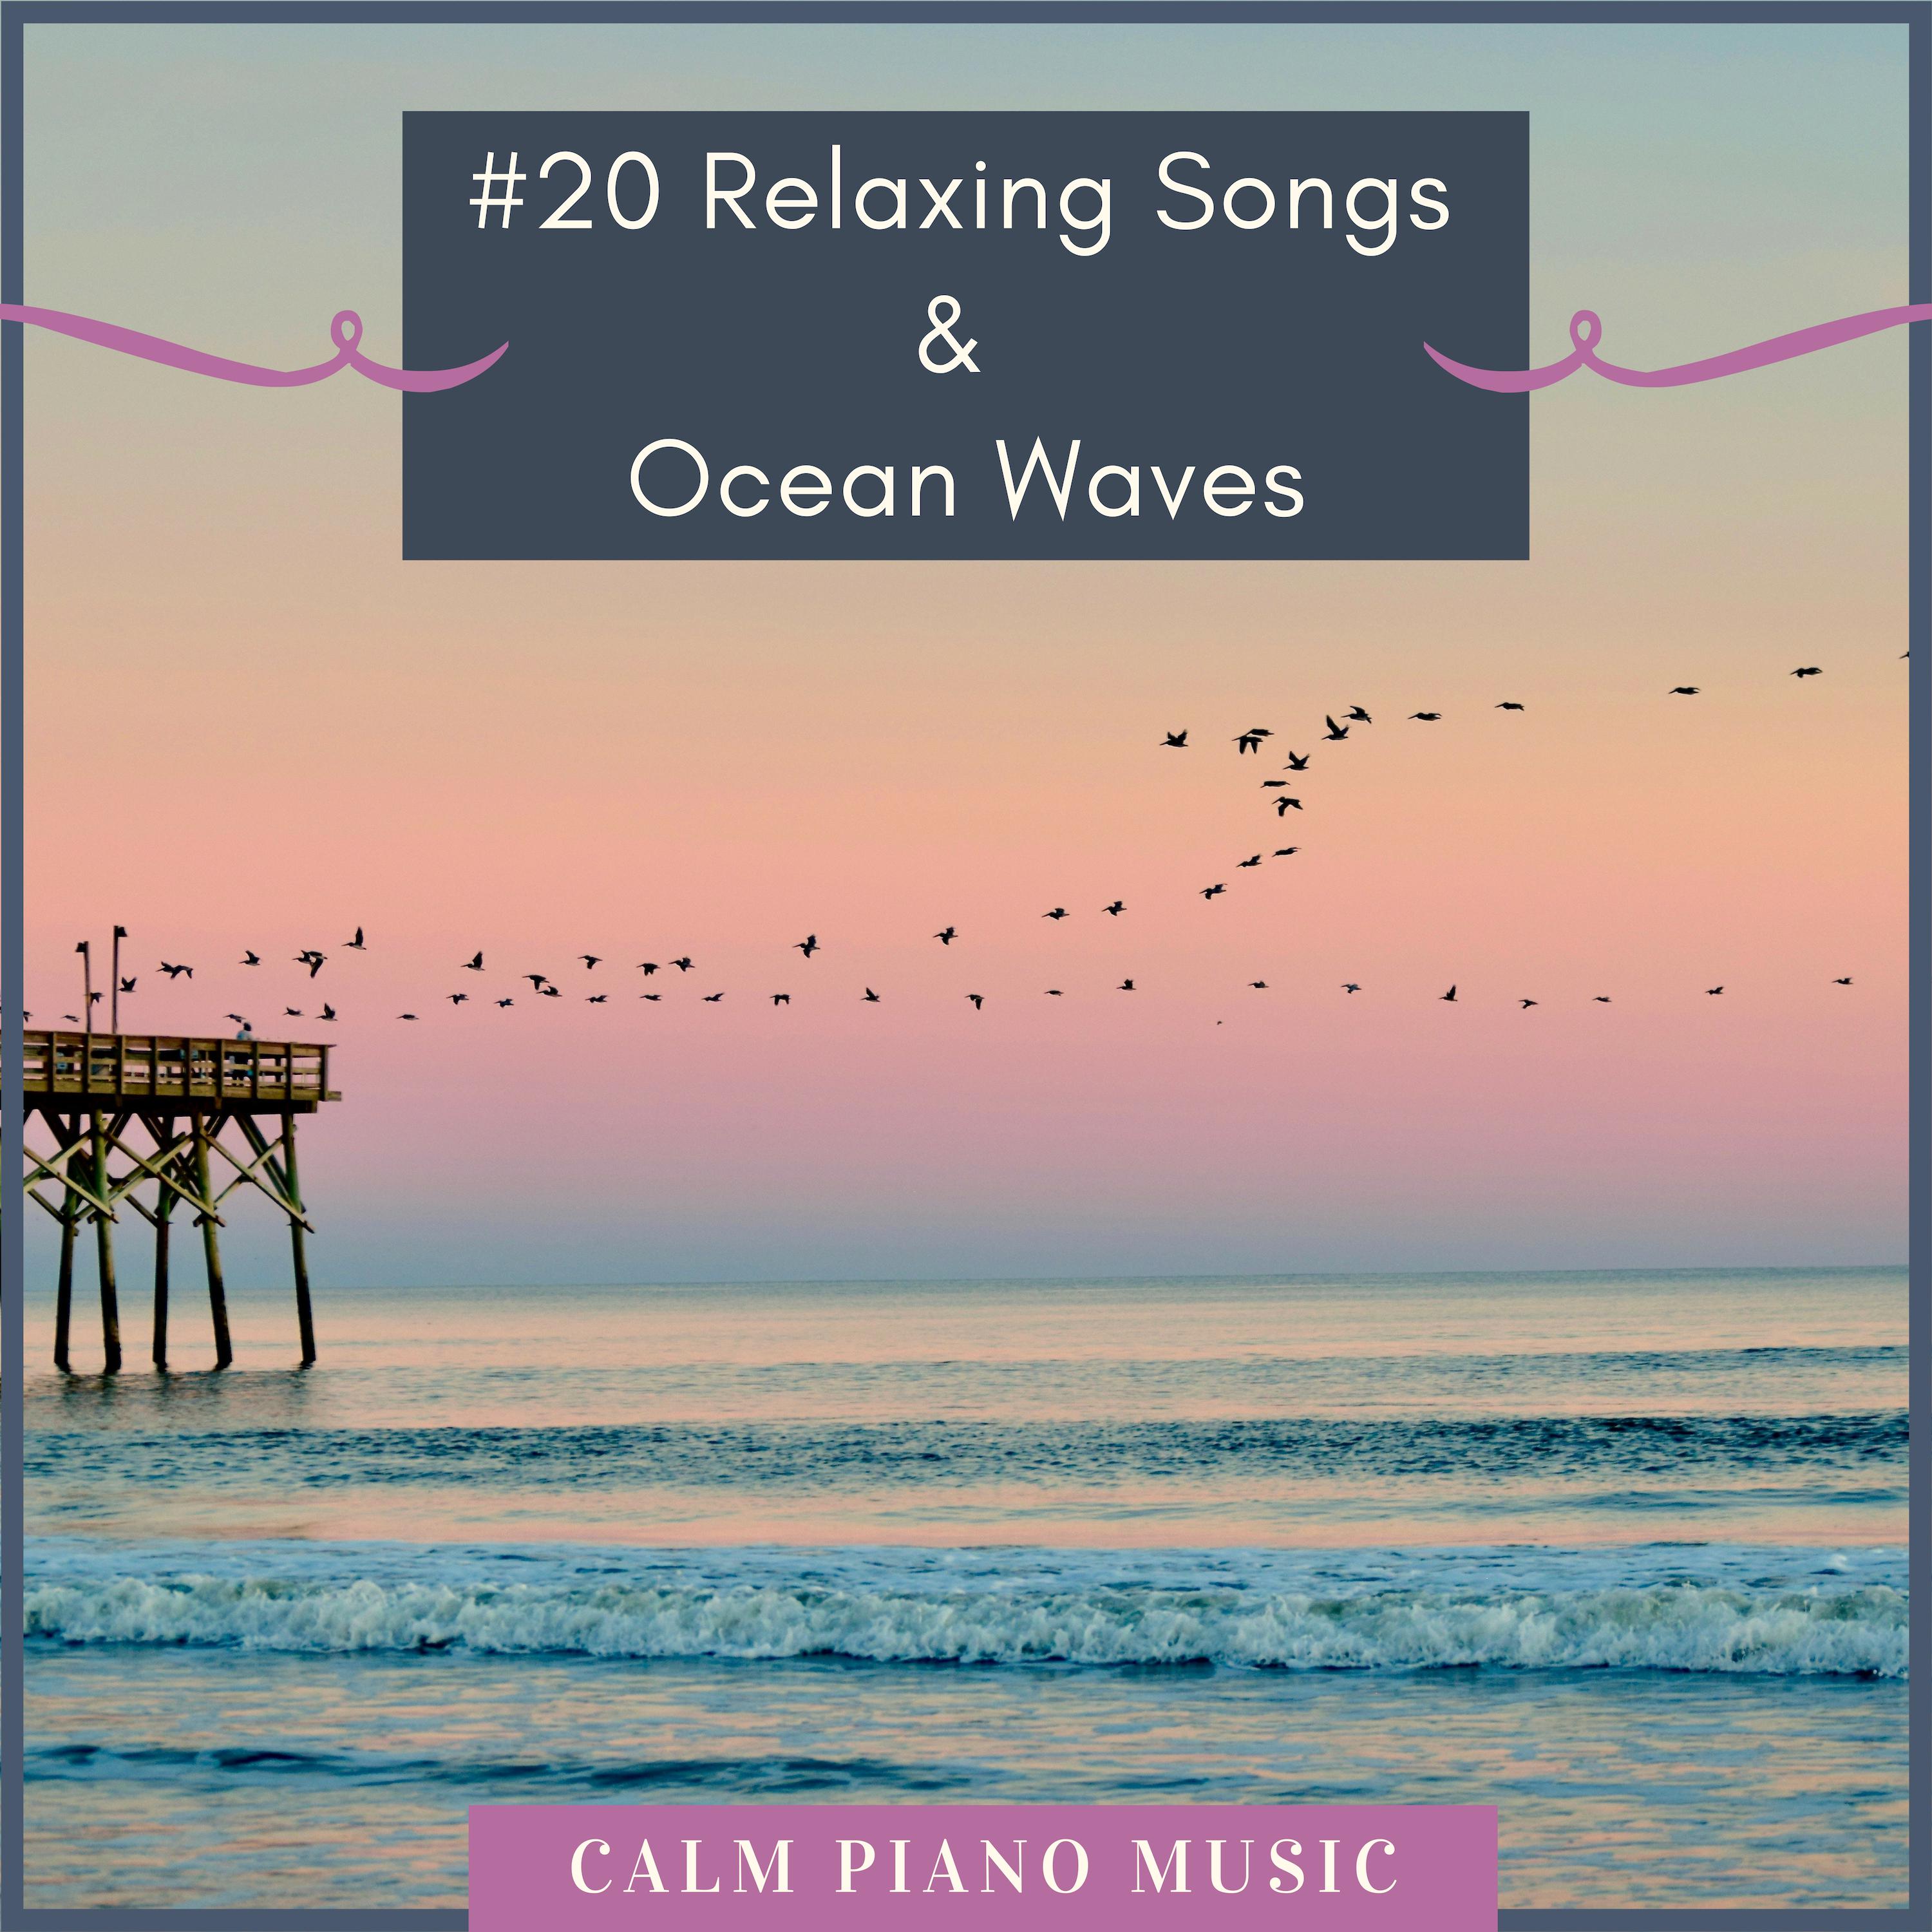 #20 Relaxing Songs & Ocean Waves - Calm Piano Music